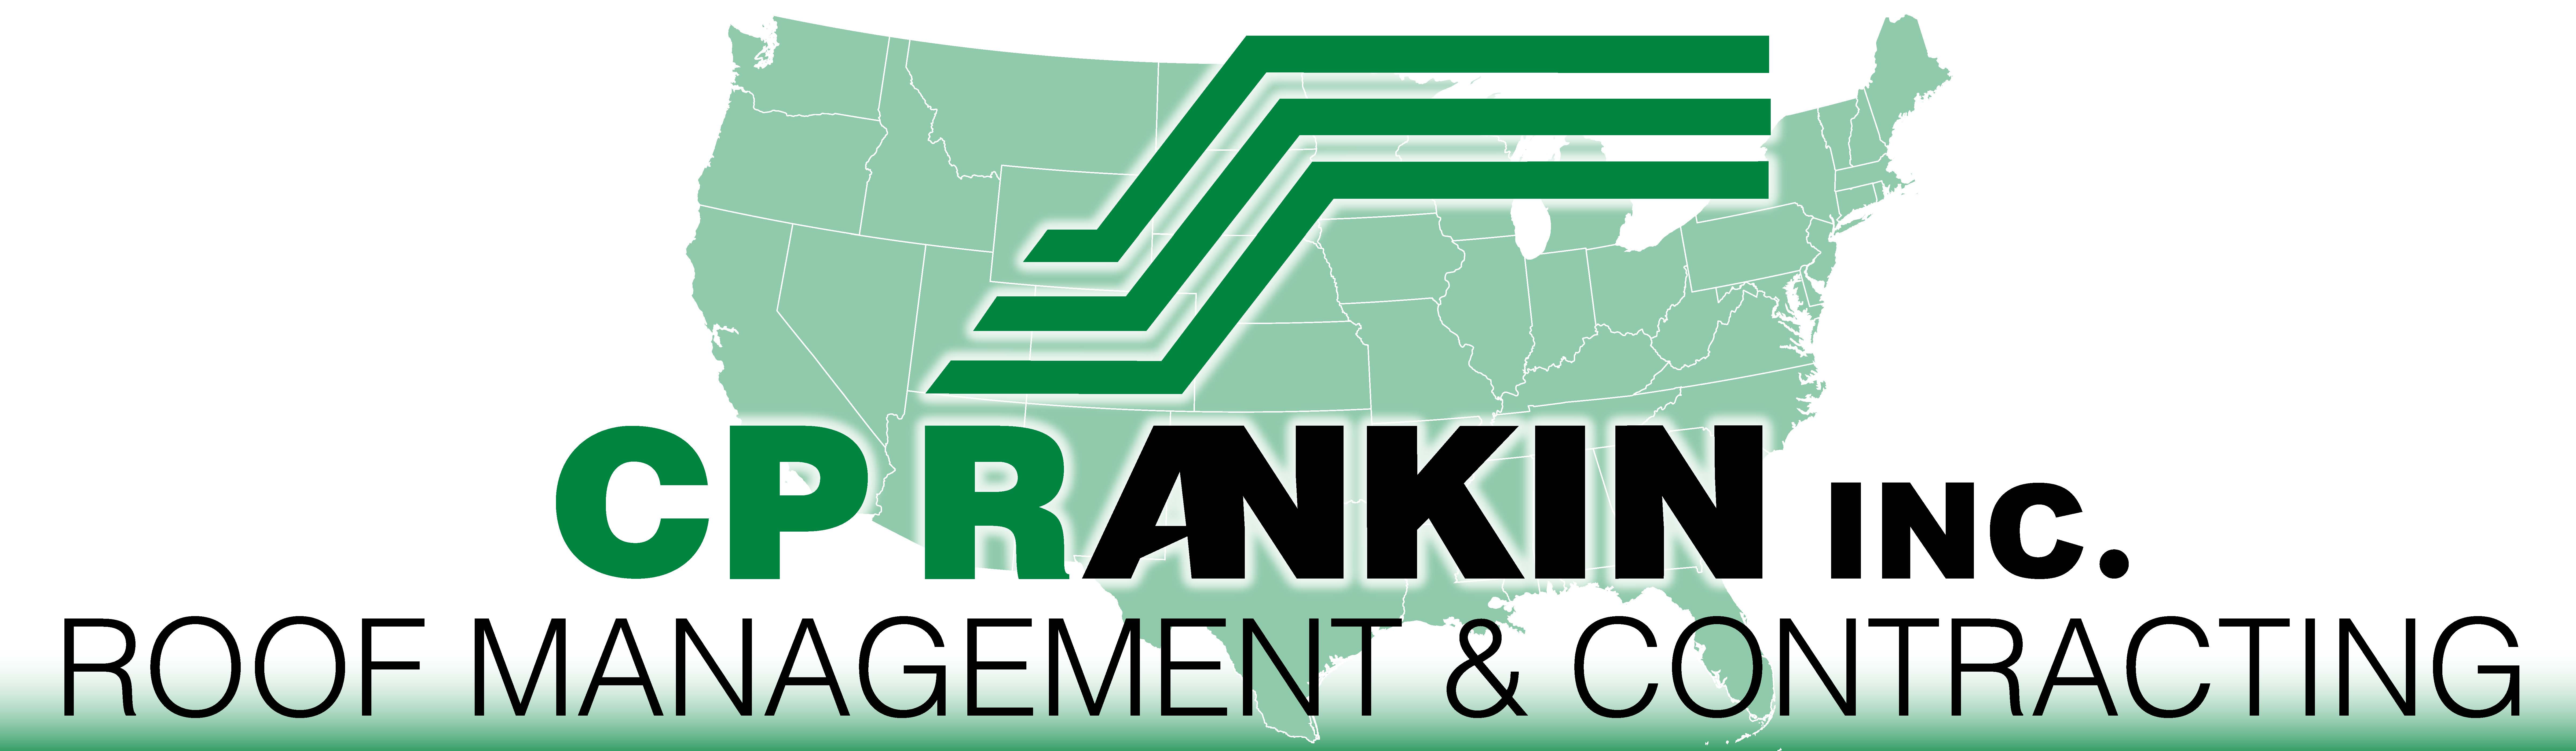 CP Rankin Roof Management